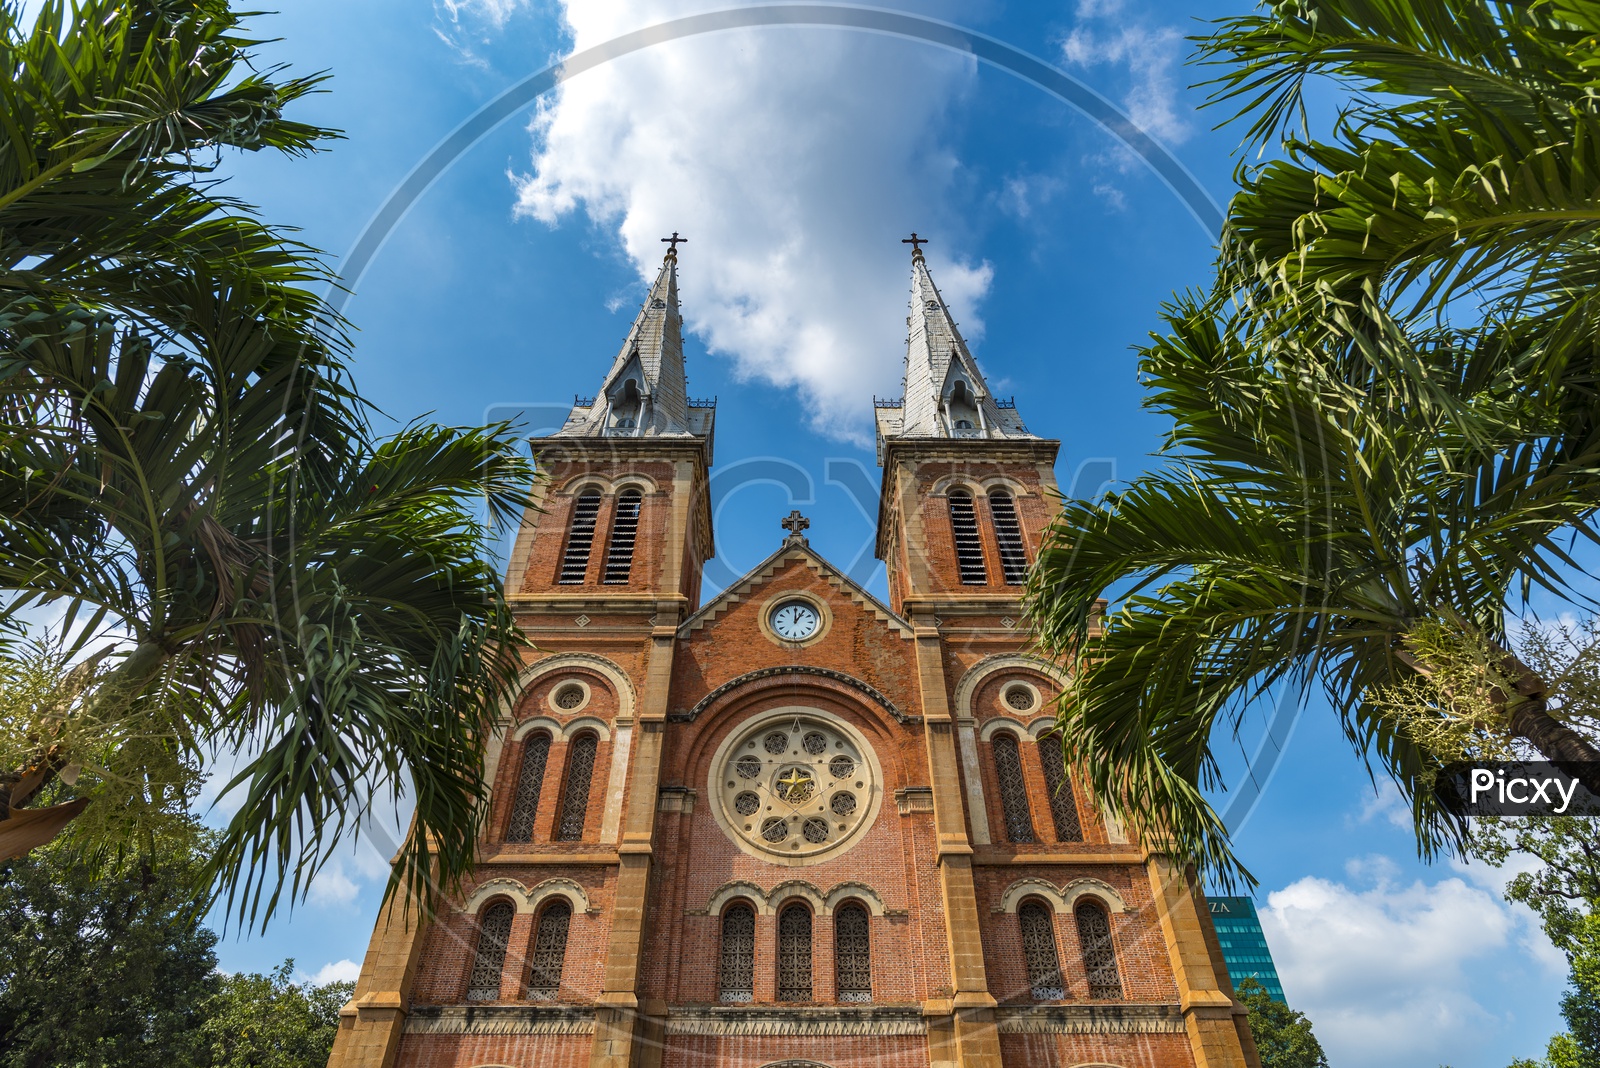 Norte-Dame Cathedral Basilica Of  Saigon Church in Vietnam